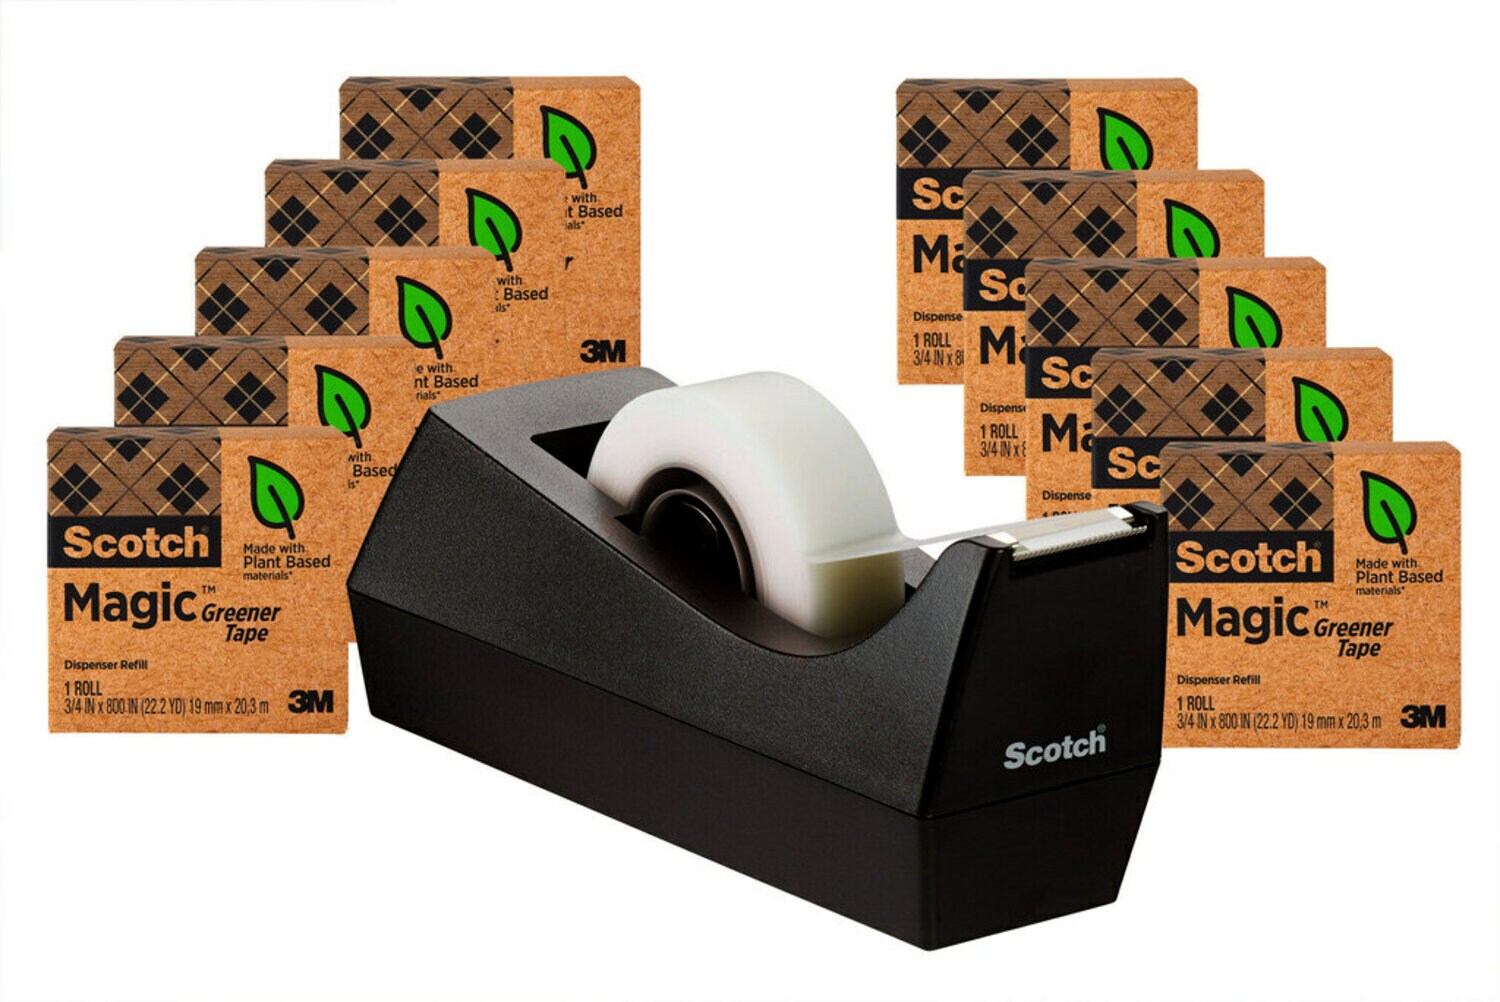 7100080357 - Scotch Magic Greener Tape with Dispenser 812-10P-C38, 3/4 in x 900 in
(19 mm x 22,8 m), 10-Pack with Tape Dispenser